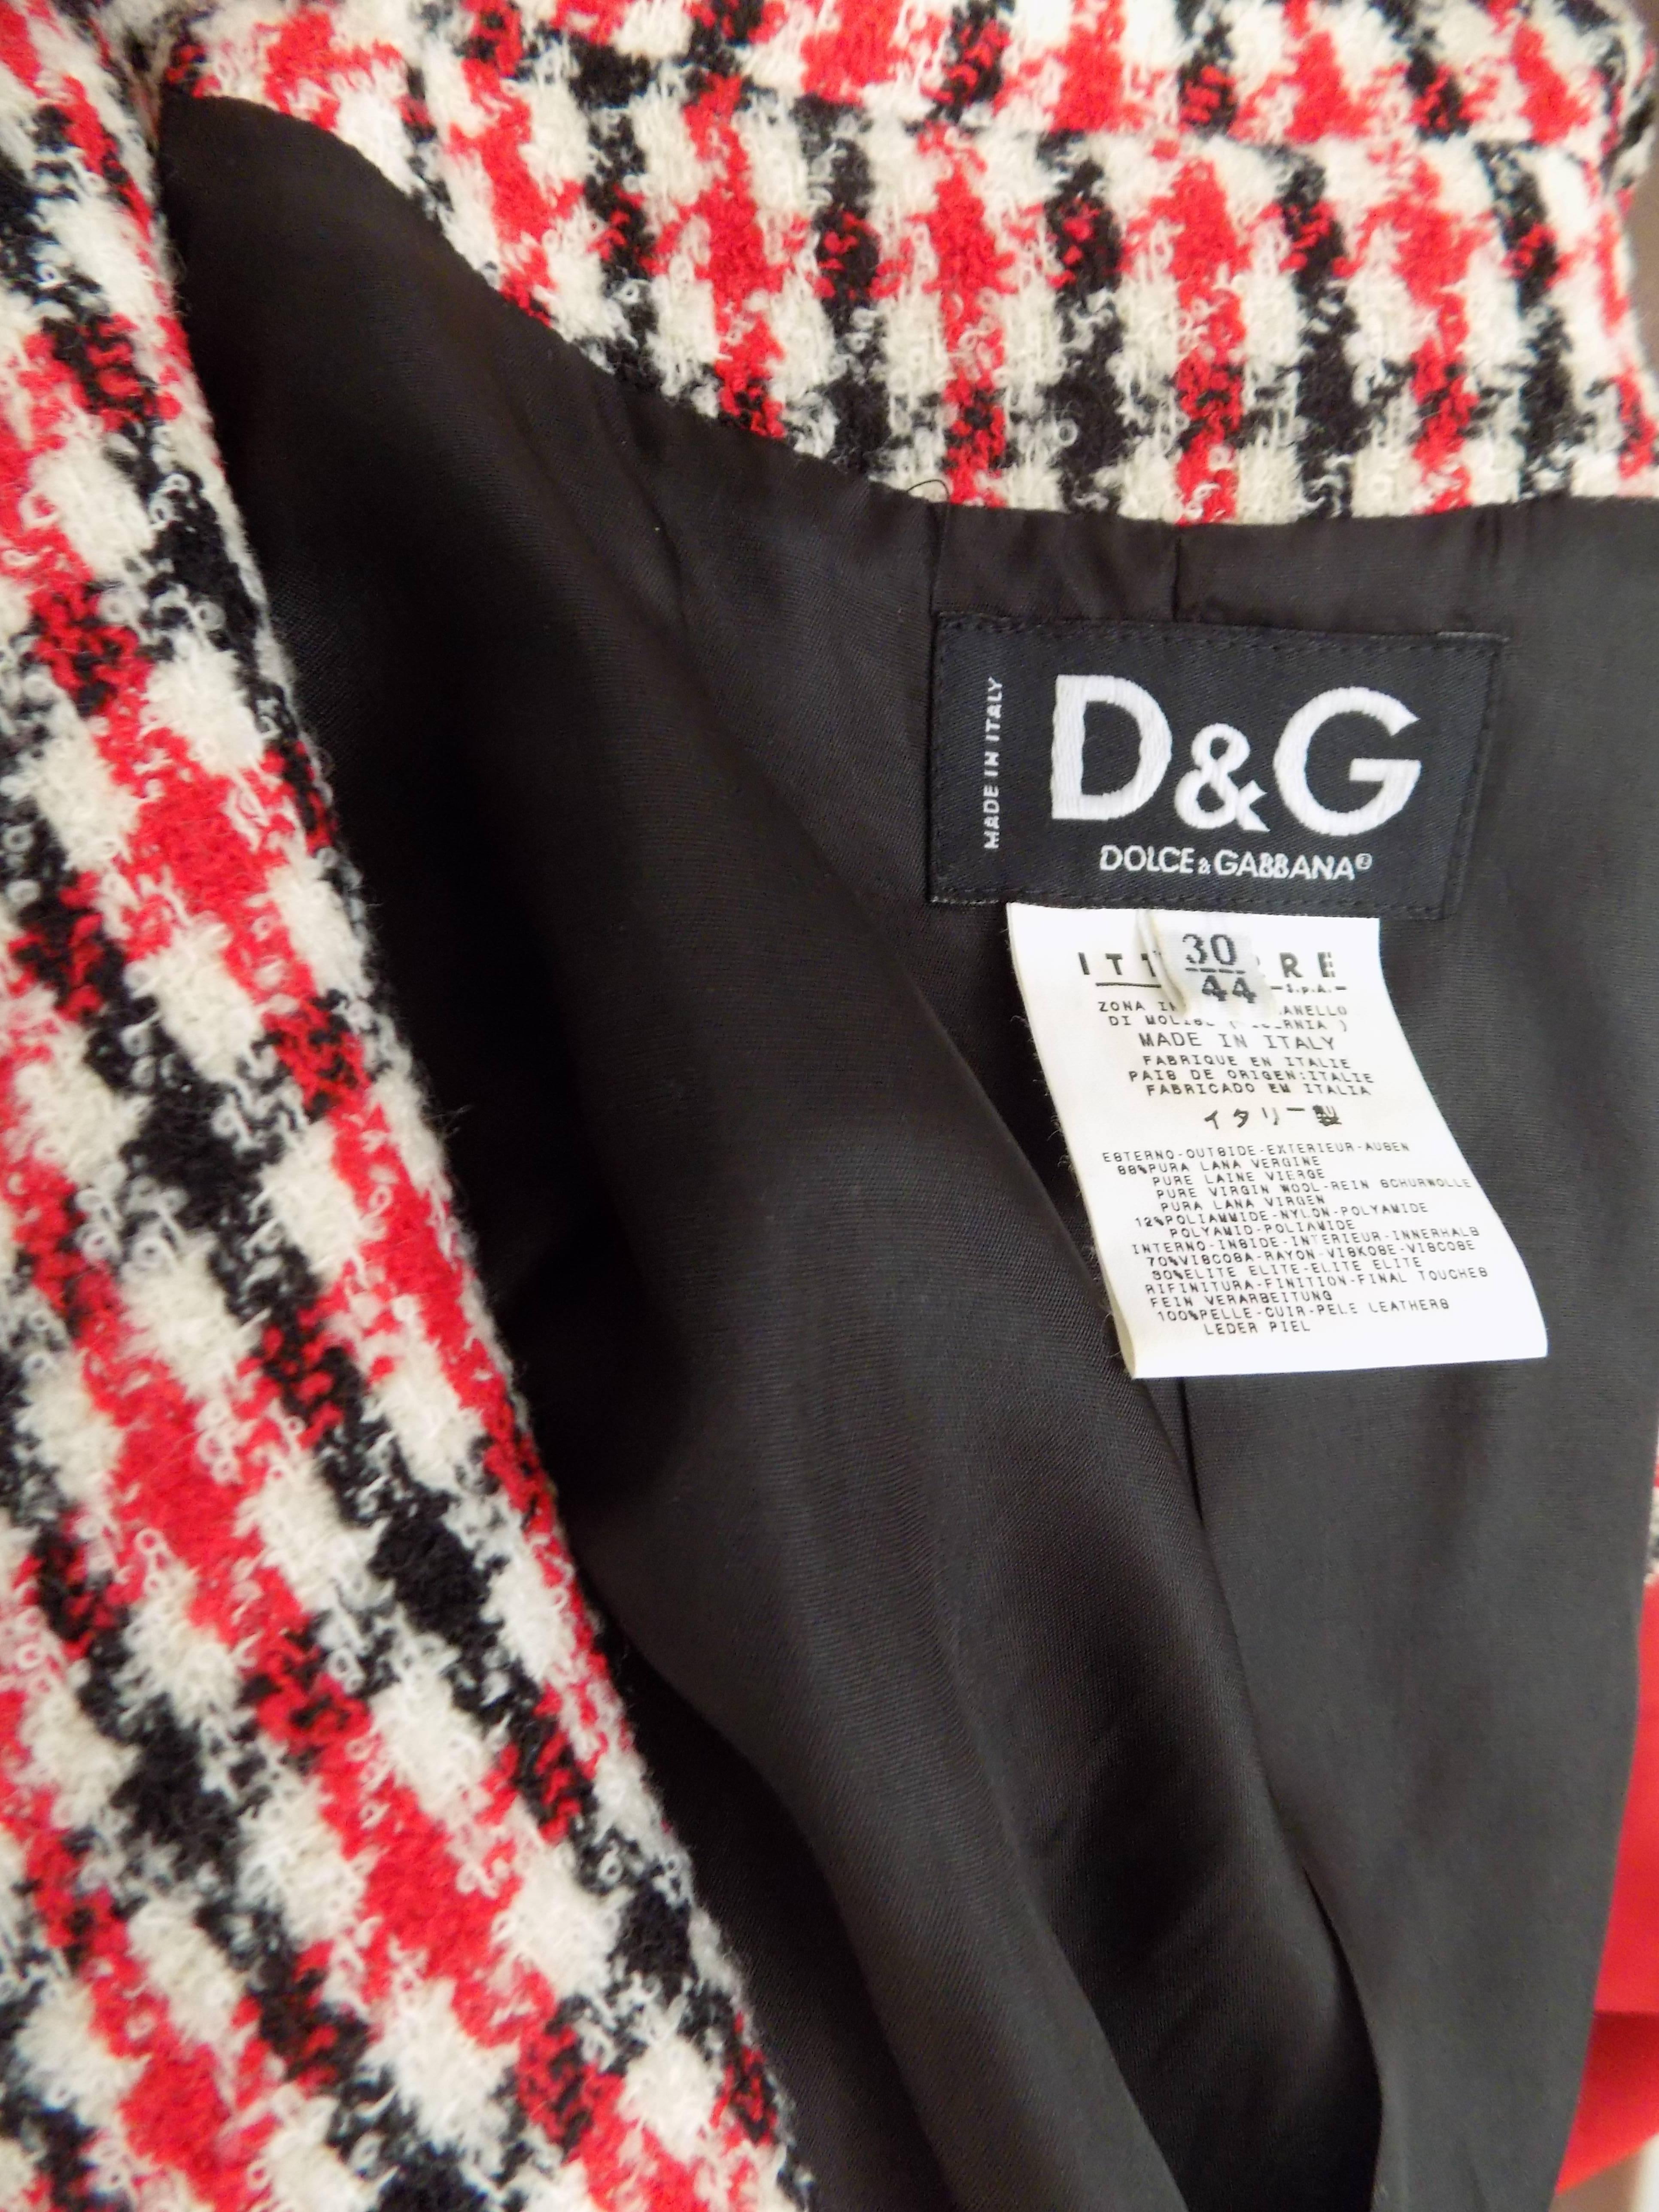 Brown Dolce Gabbana D&G jacket